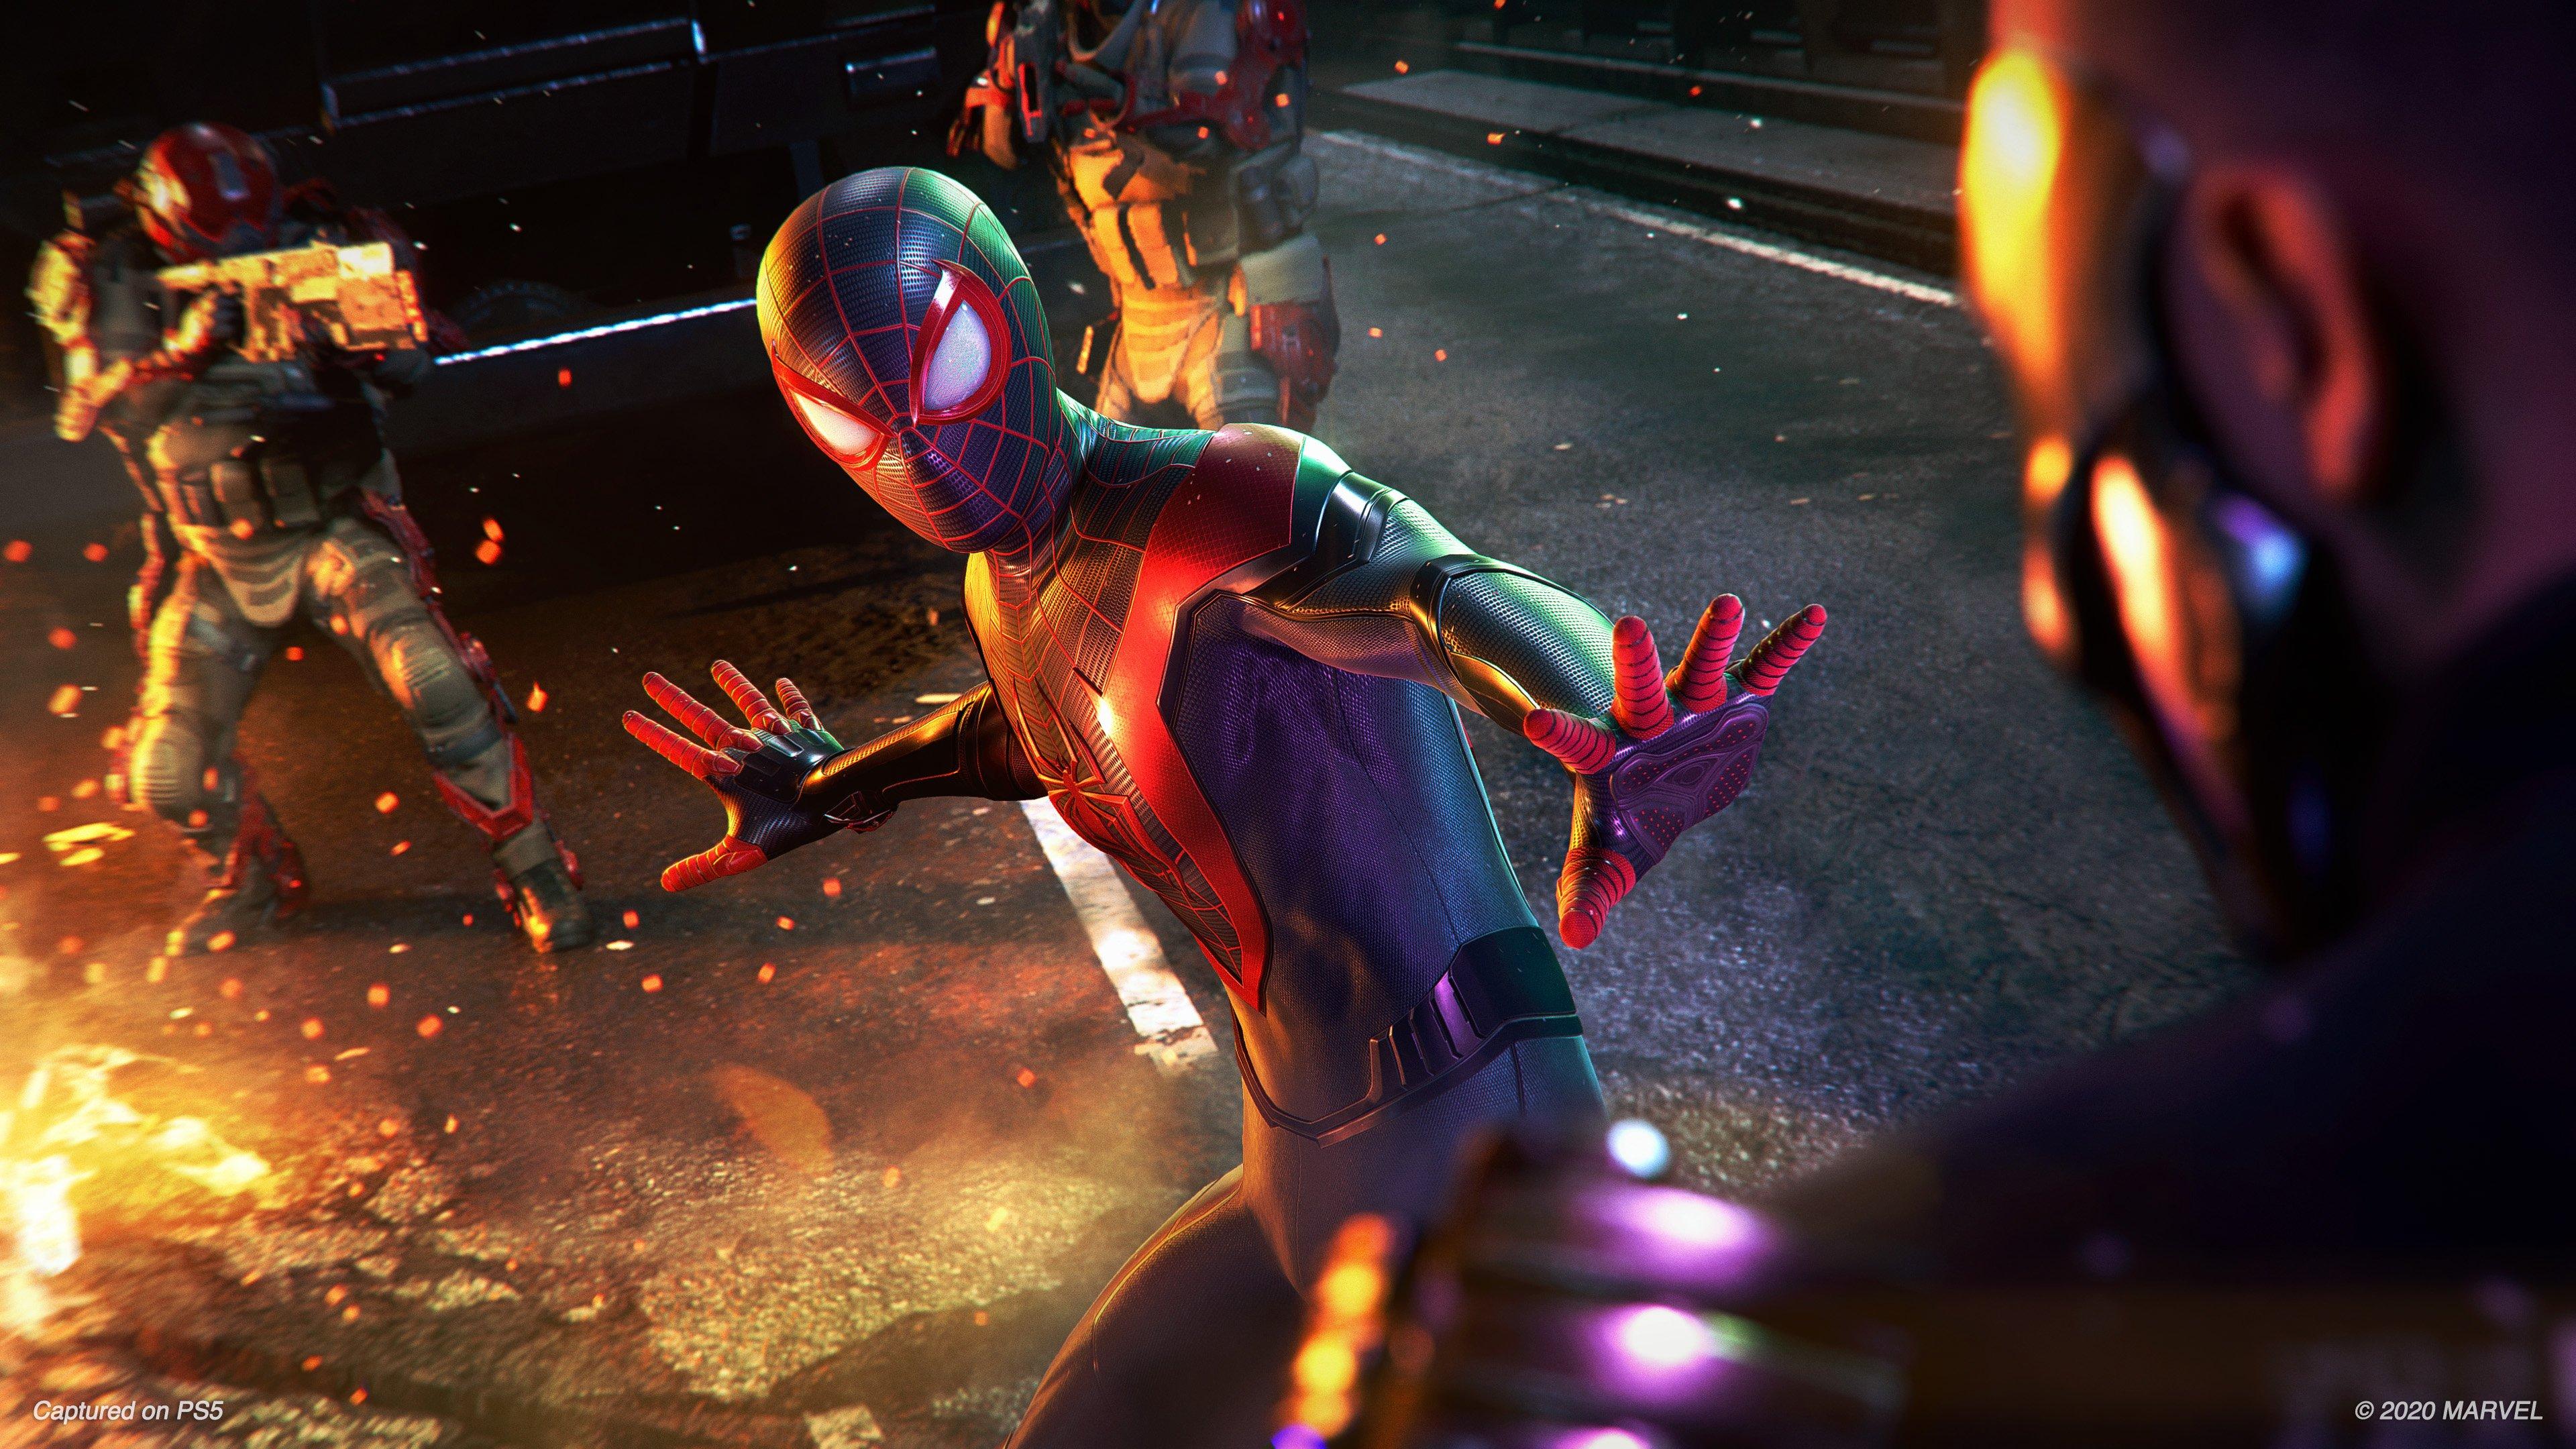 Marvel's Spider-Man: Miles Morales - PC [Steam Online Game Code] 